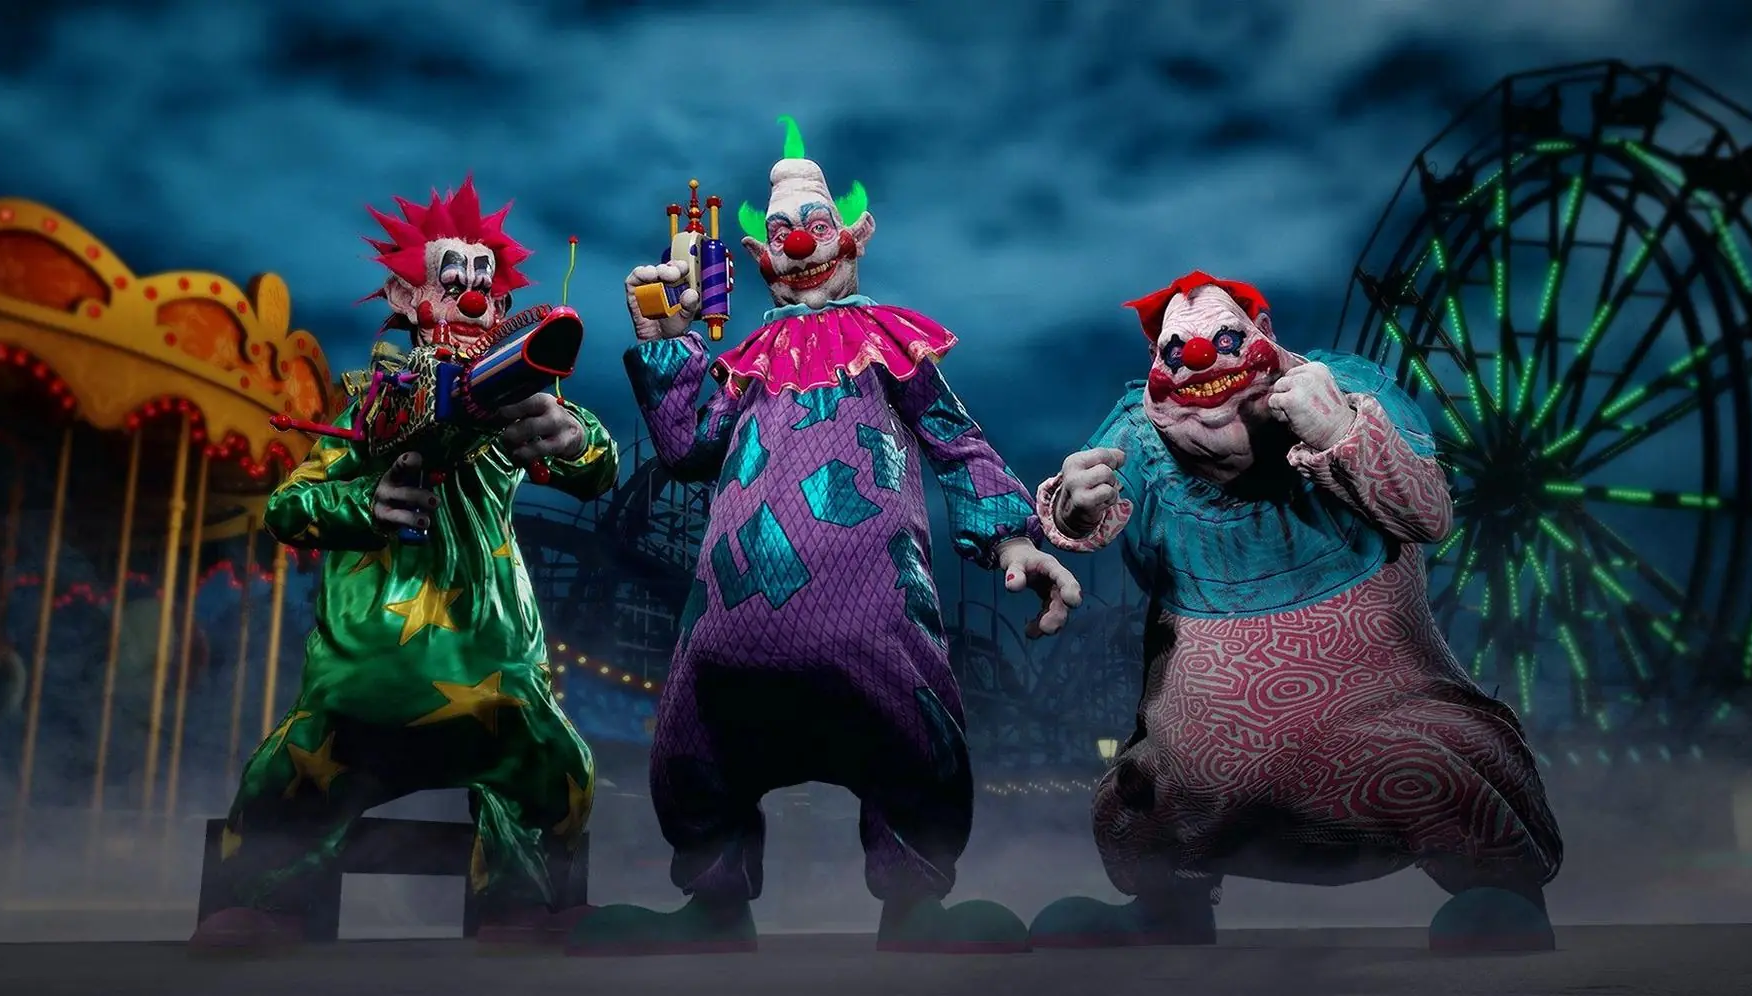 Pāʻani Killer Klowns